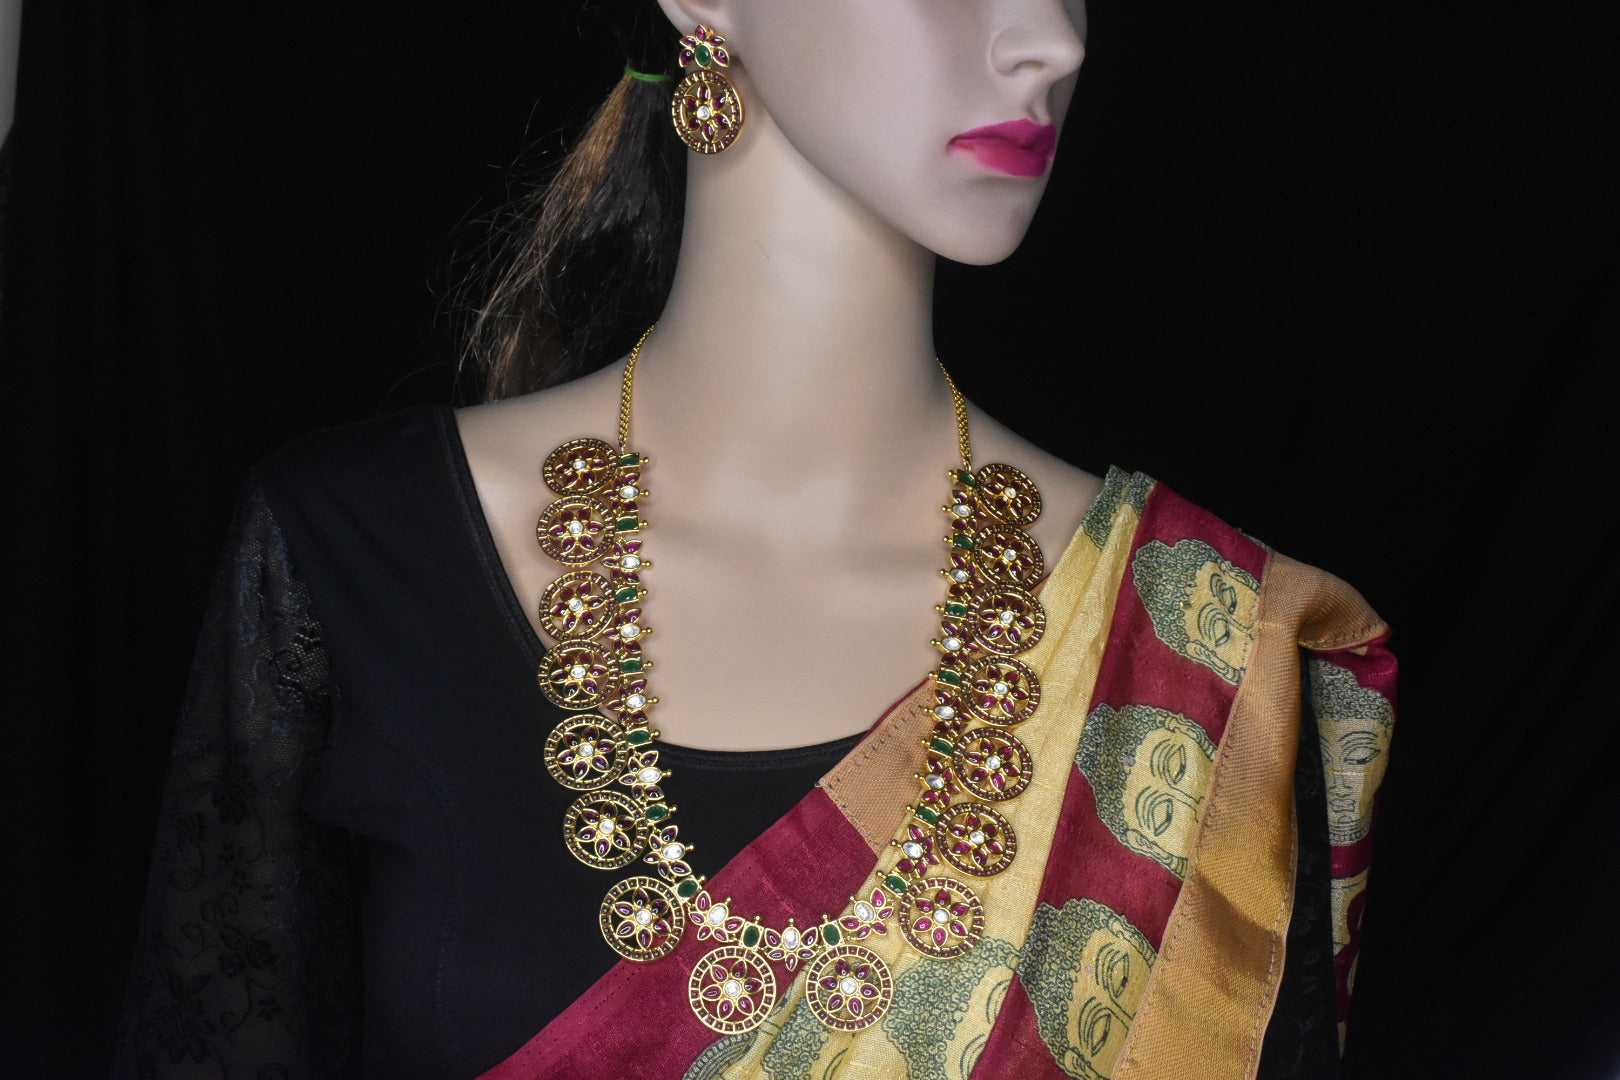 Bottu mala necklace | India jewelry, Mala necklace, Jewllery